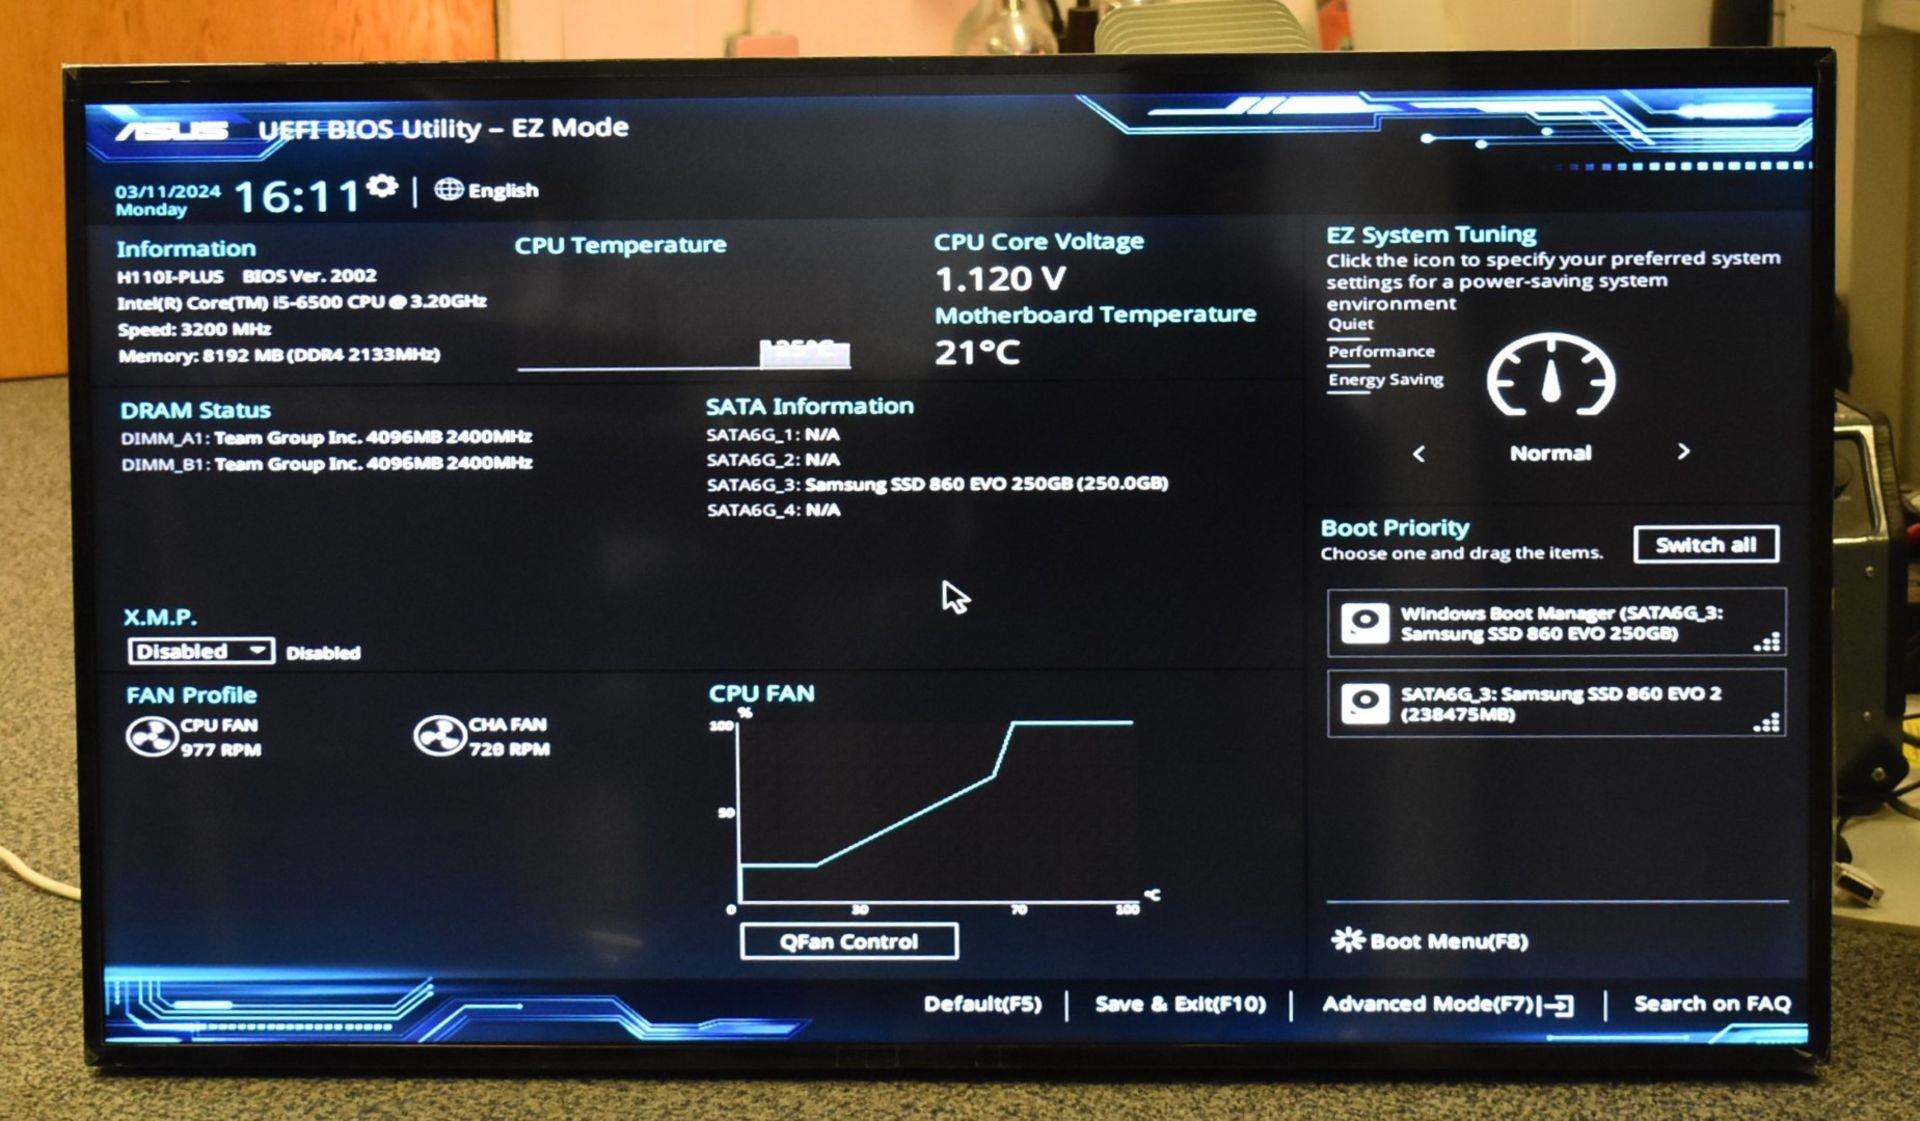 1 x iiyama ProLite 48 Inch Full HD Professional LED Display Monitor With SVA Panel Technology - Image 4 of 12